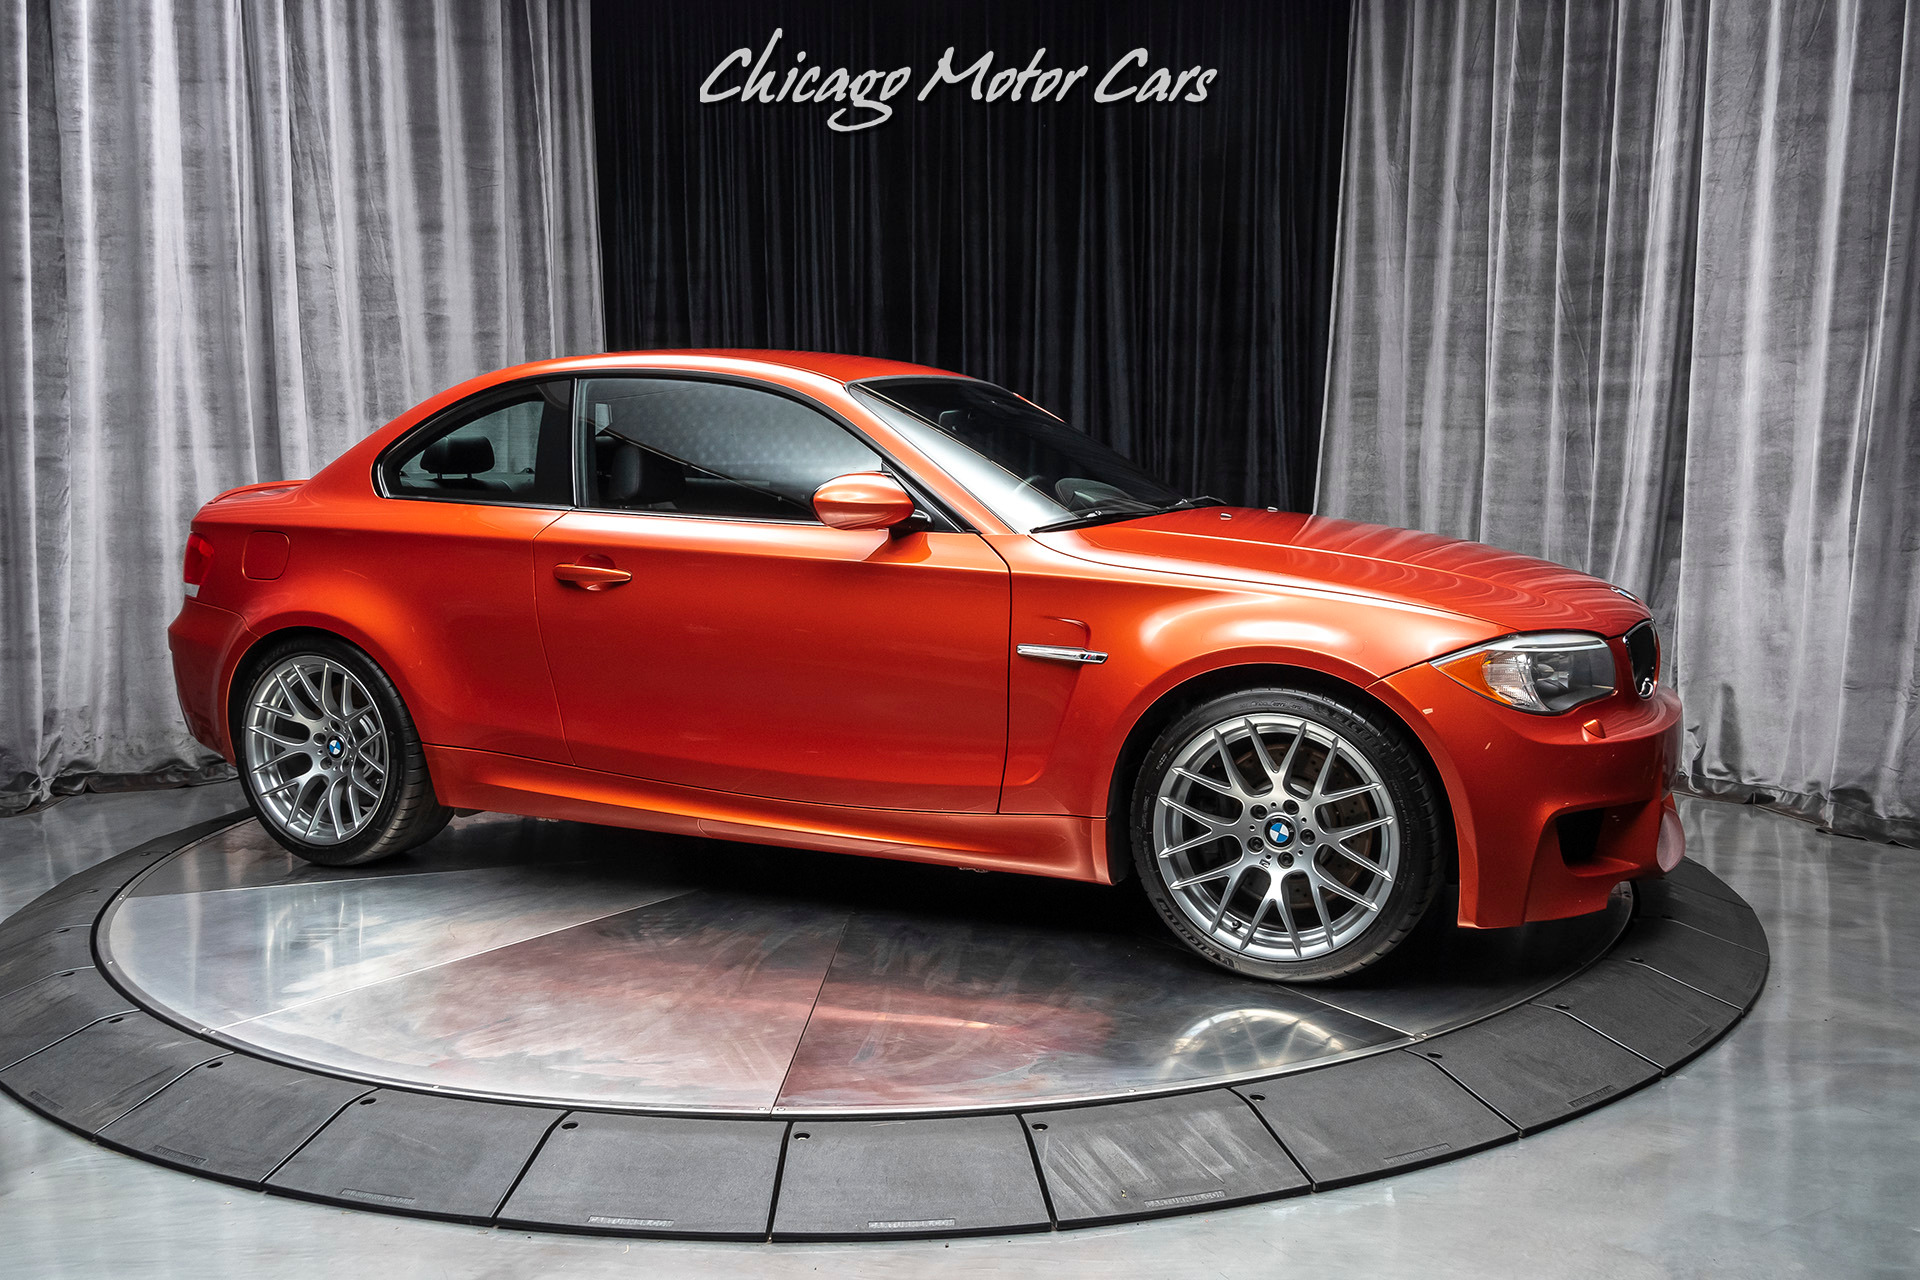 Used-2011-BMW-1M-Coupe-RARE-1435-in-Valencia-Orange-Collectors-Example